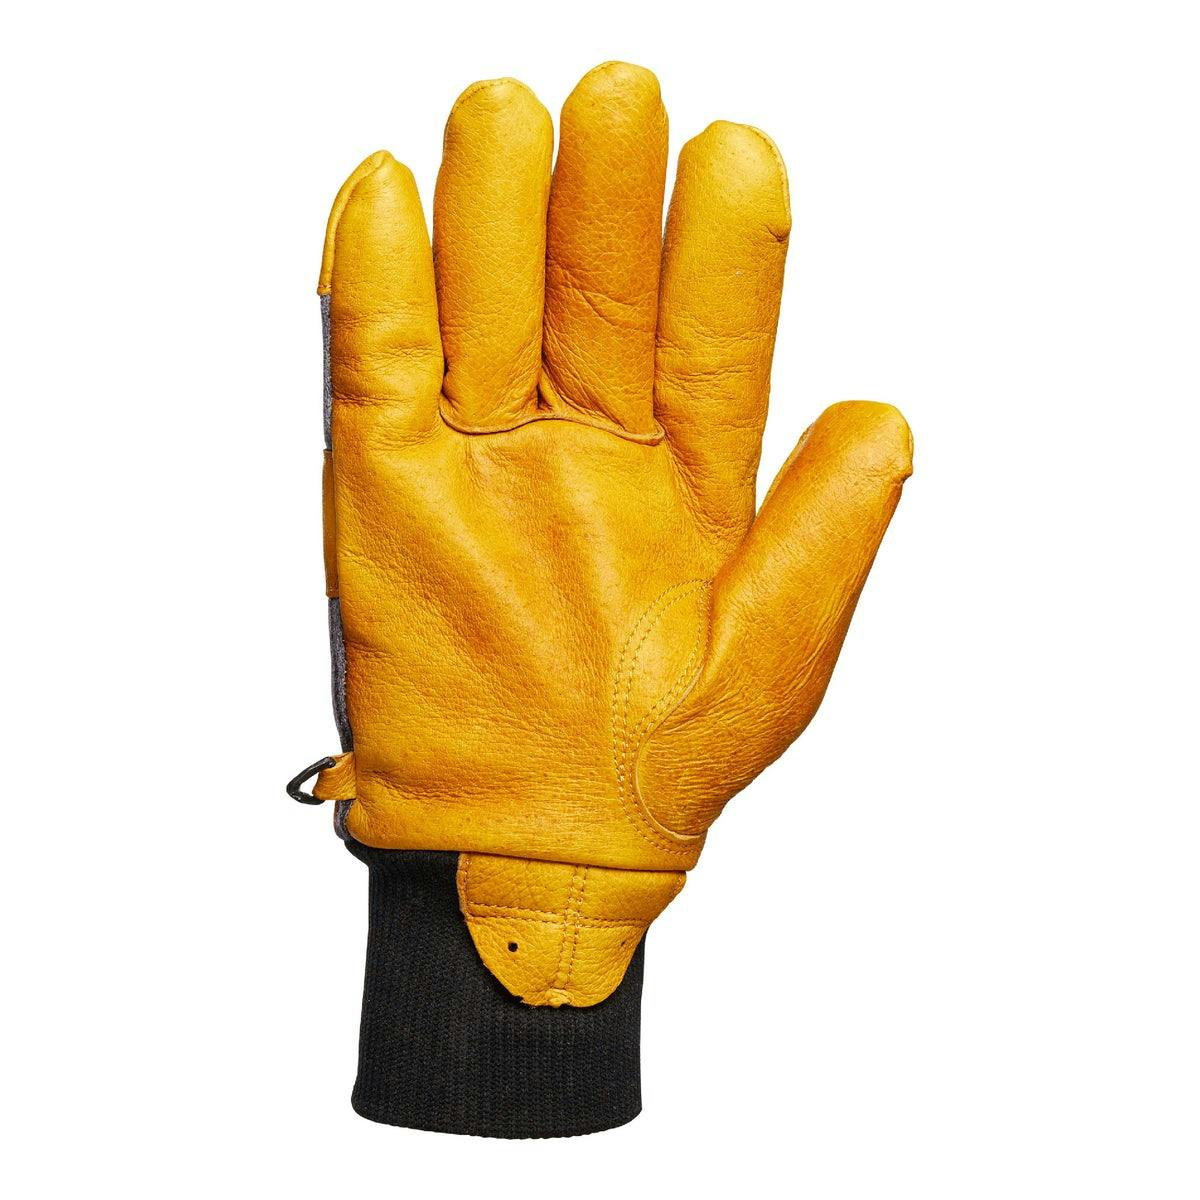 Flylow Tough Guy Gloves